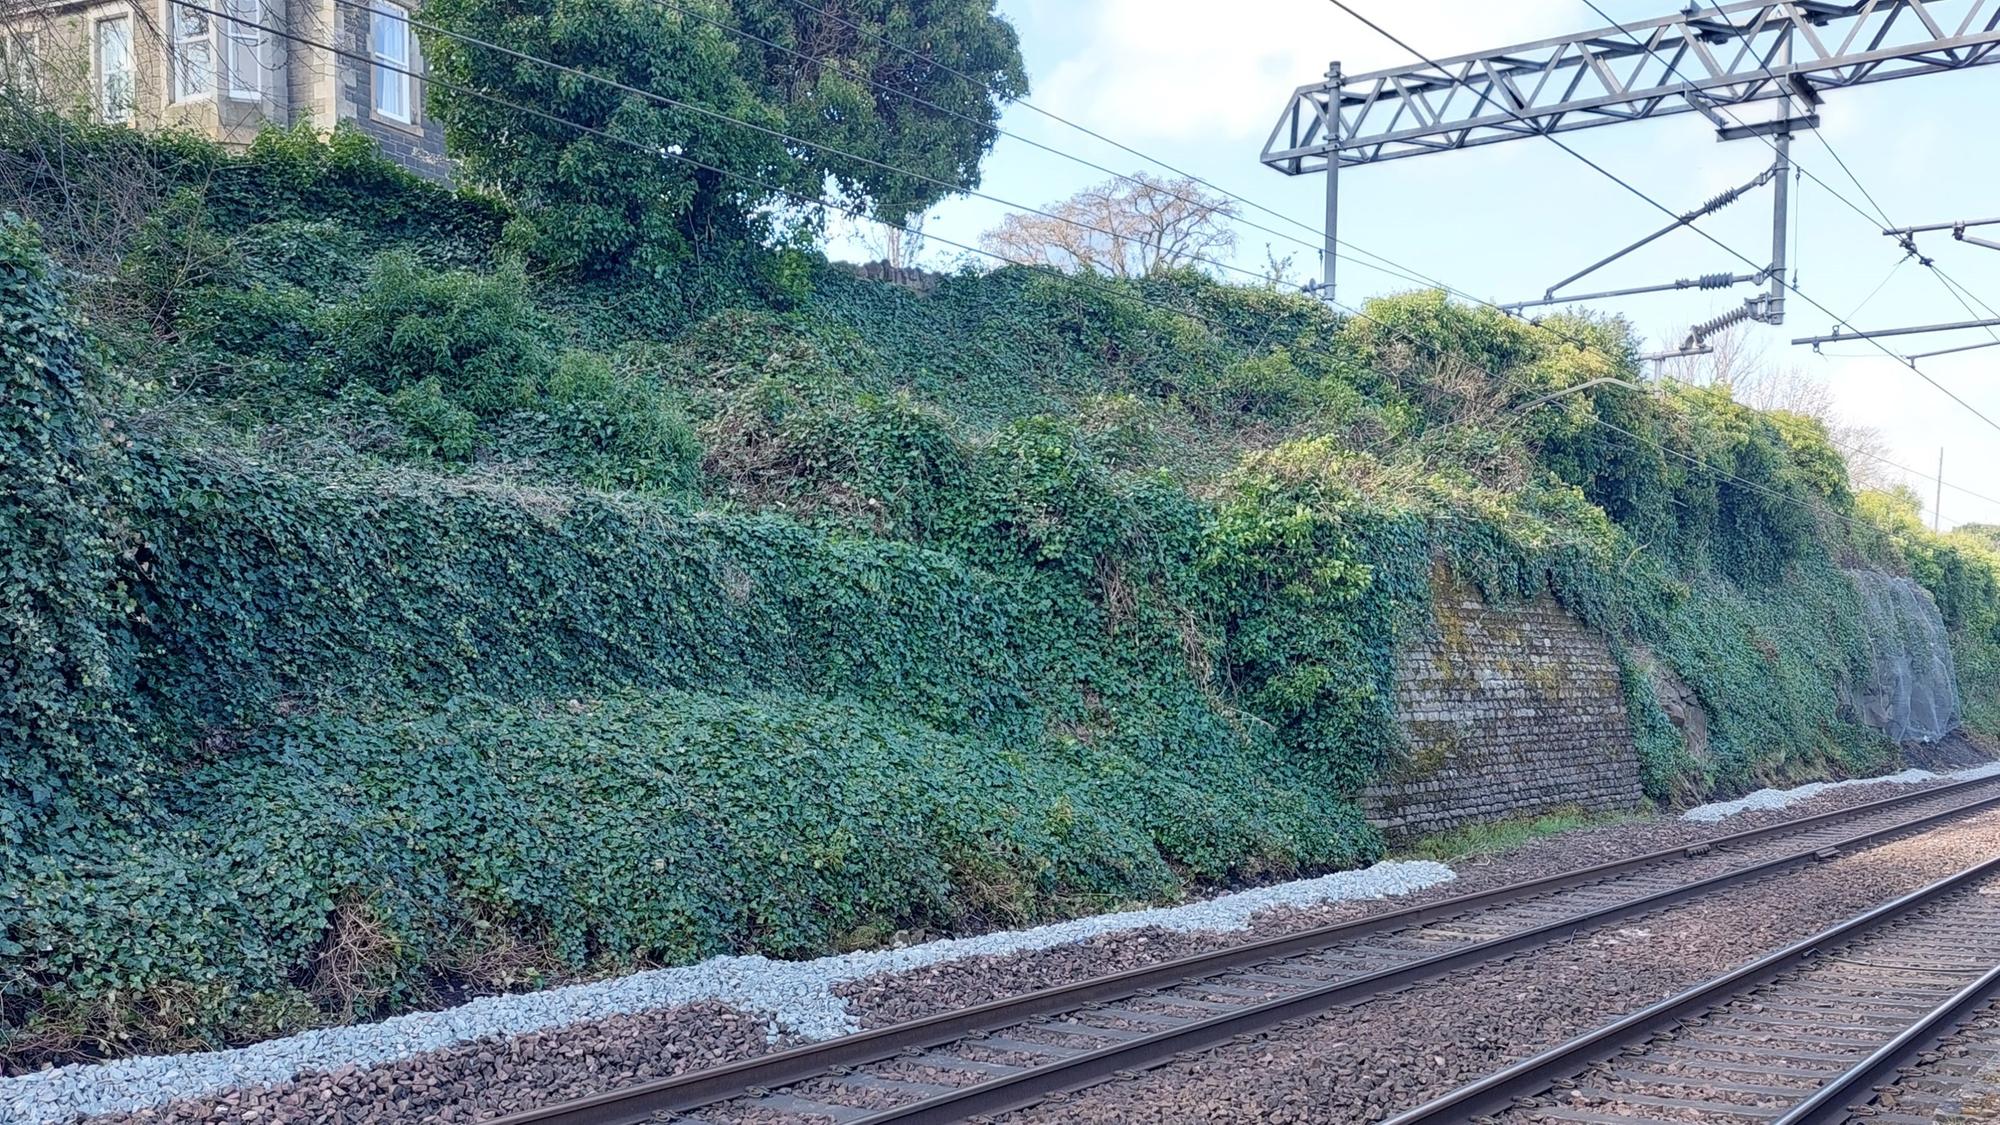 edinburgh trains: passengers warned of significant disruption on edinburgh-glasgow line due to rockfall prevention works